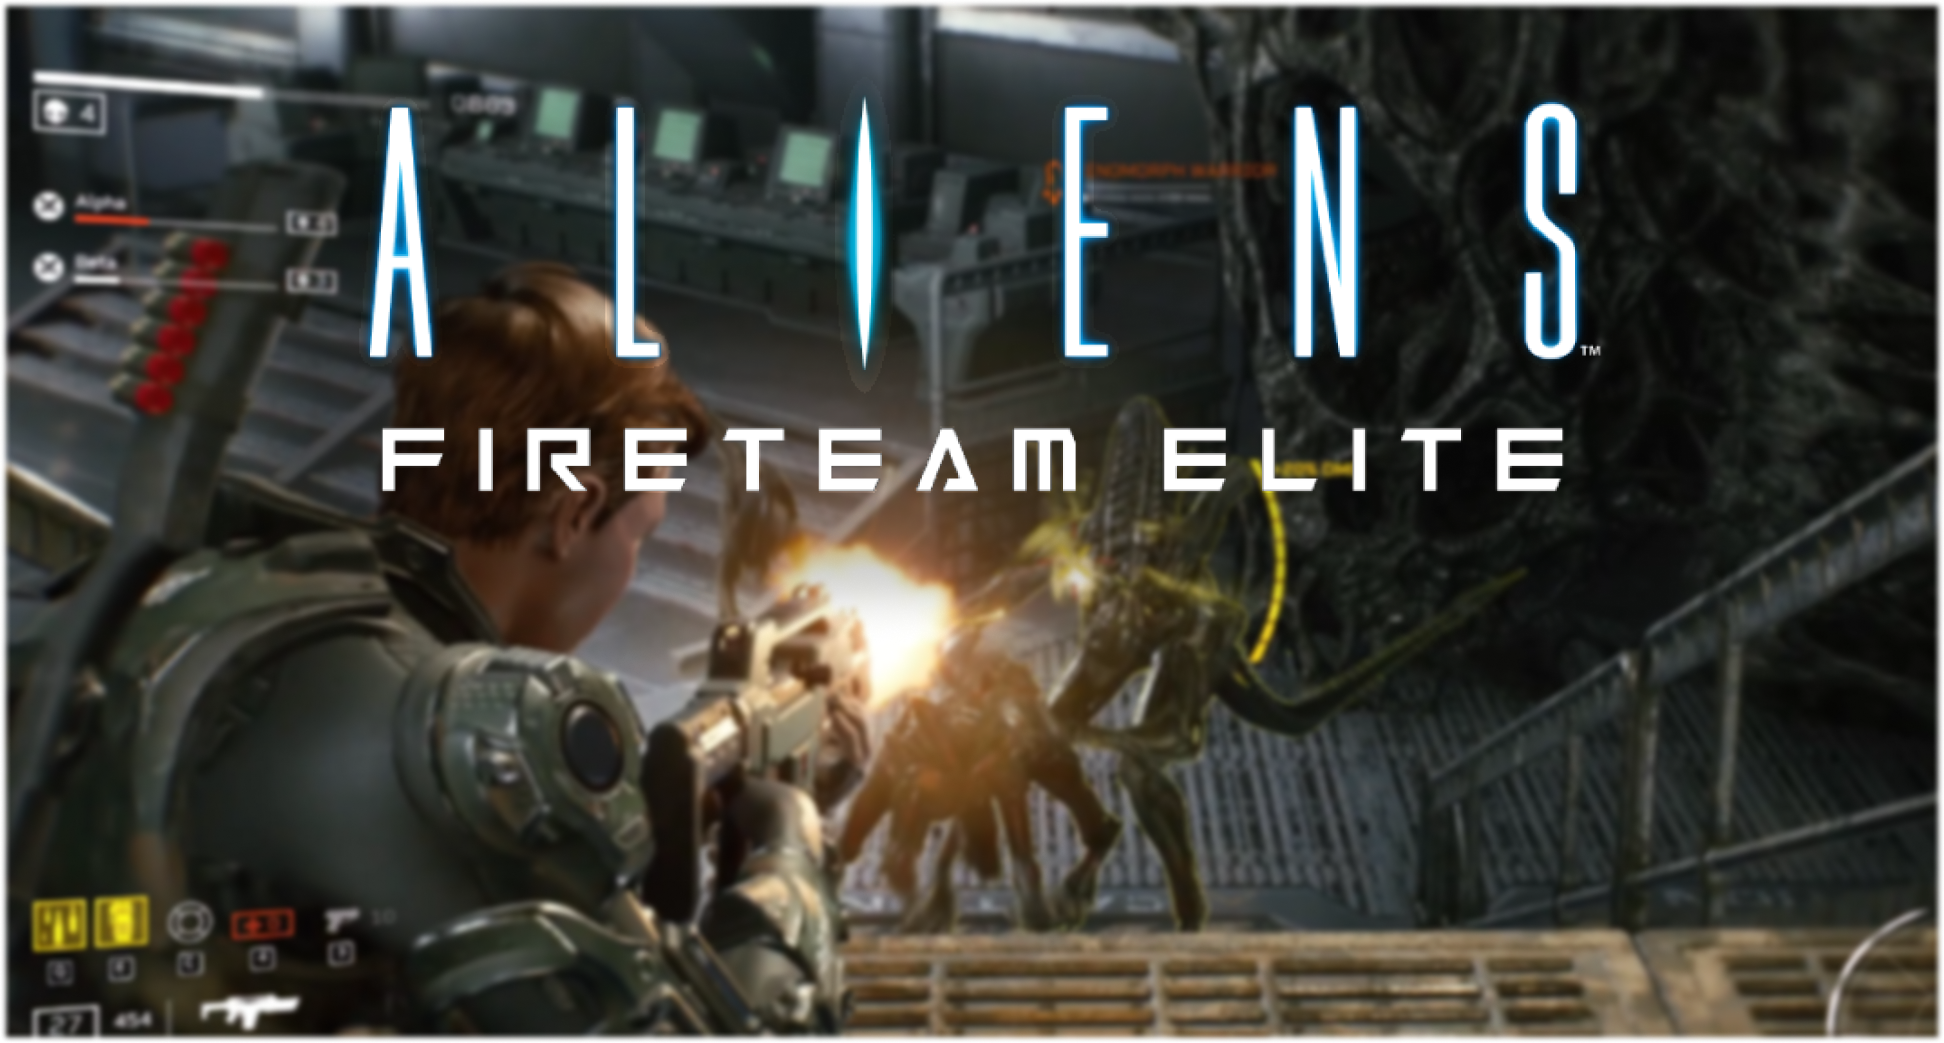 Aliens: Fireteam Elite box art